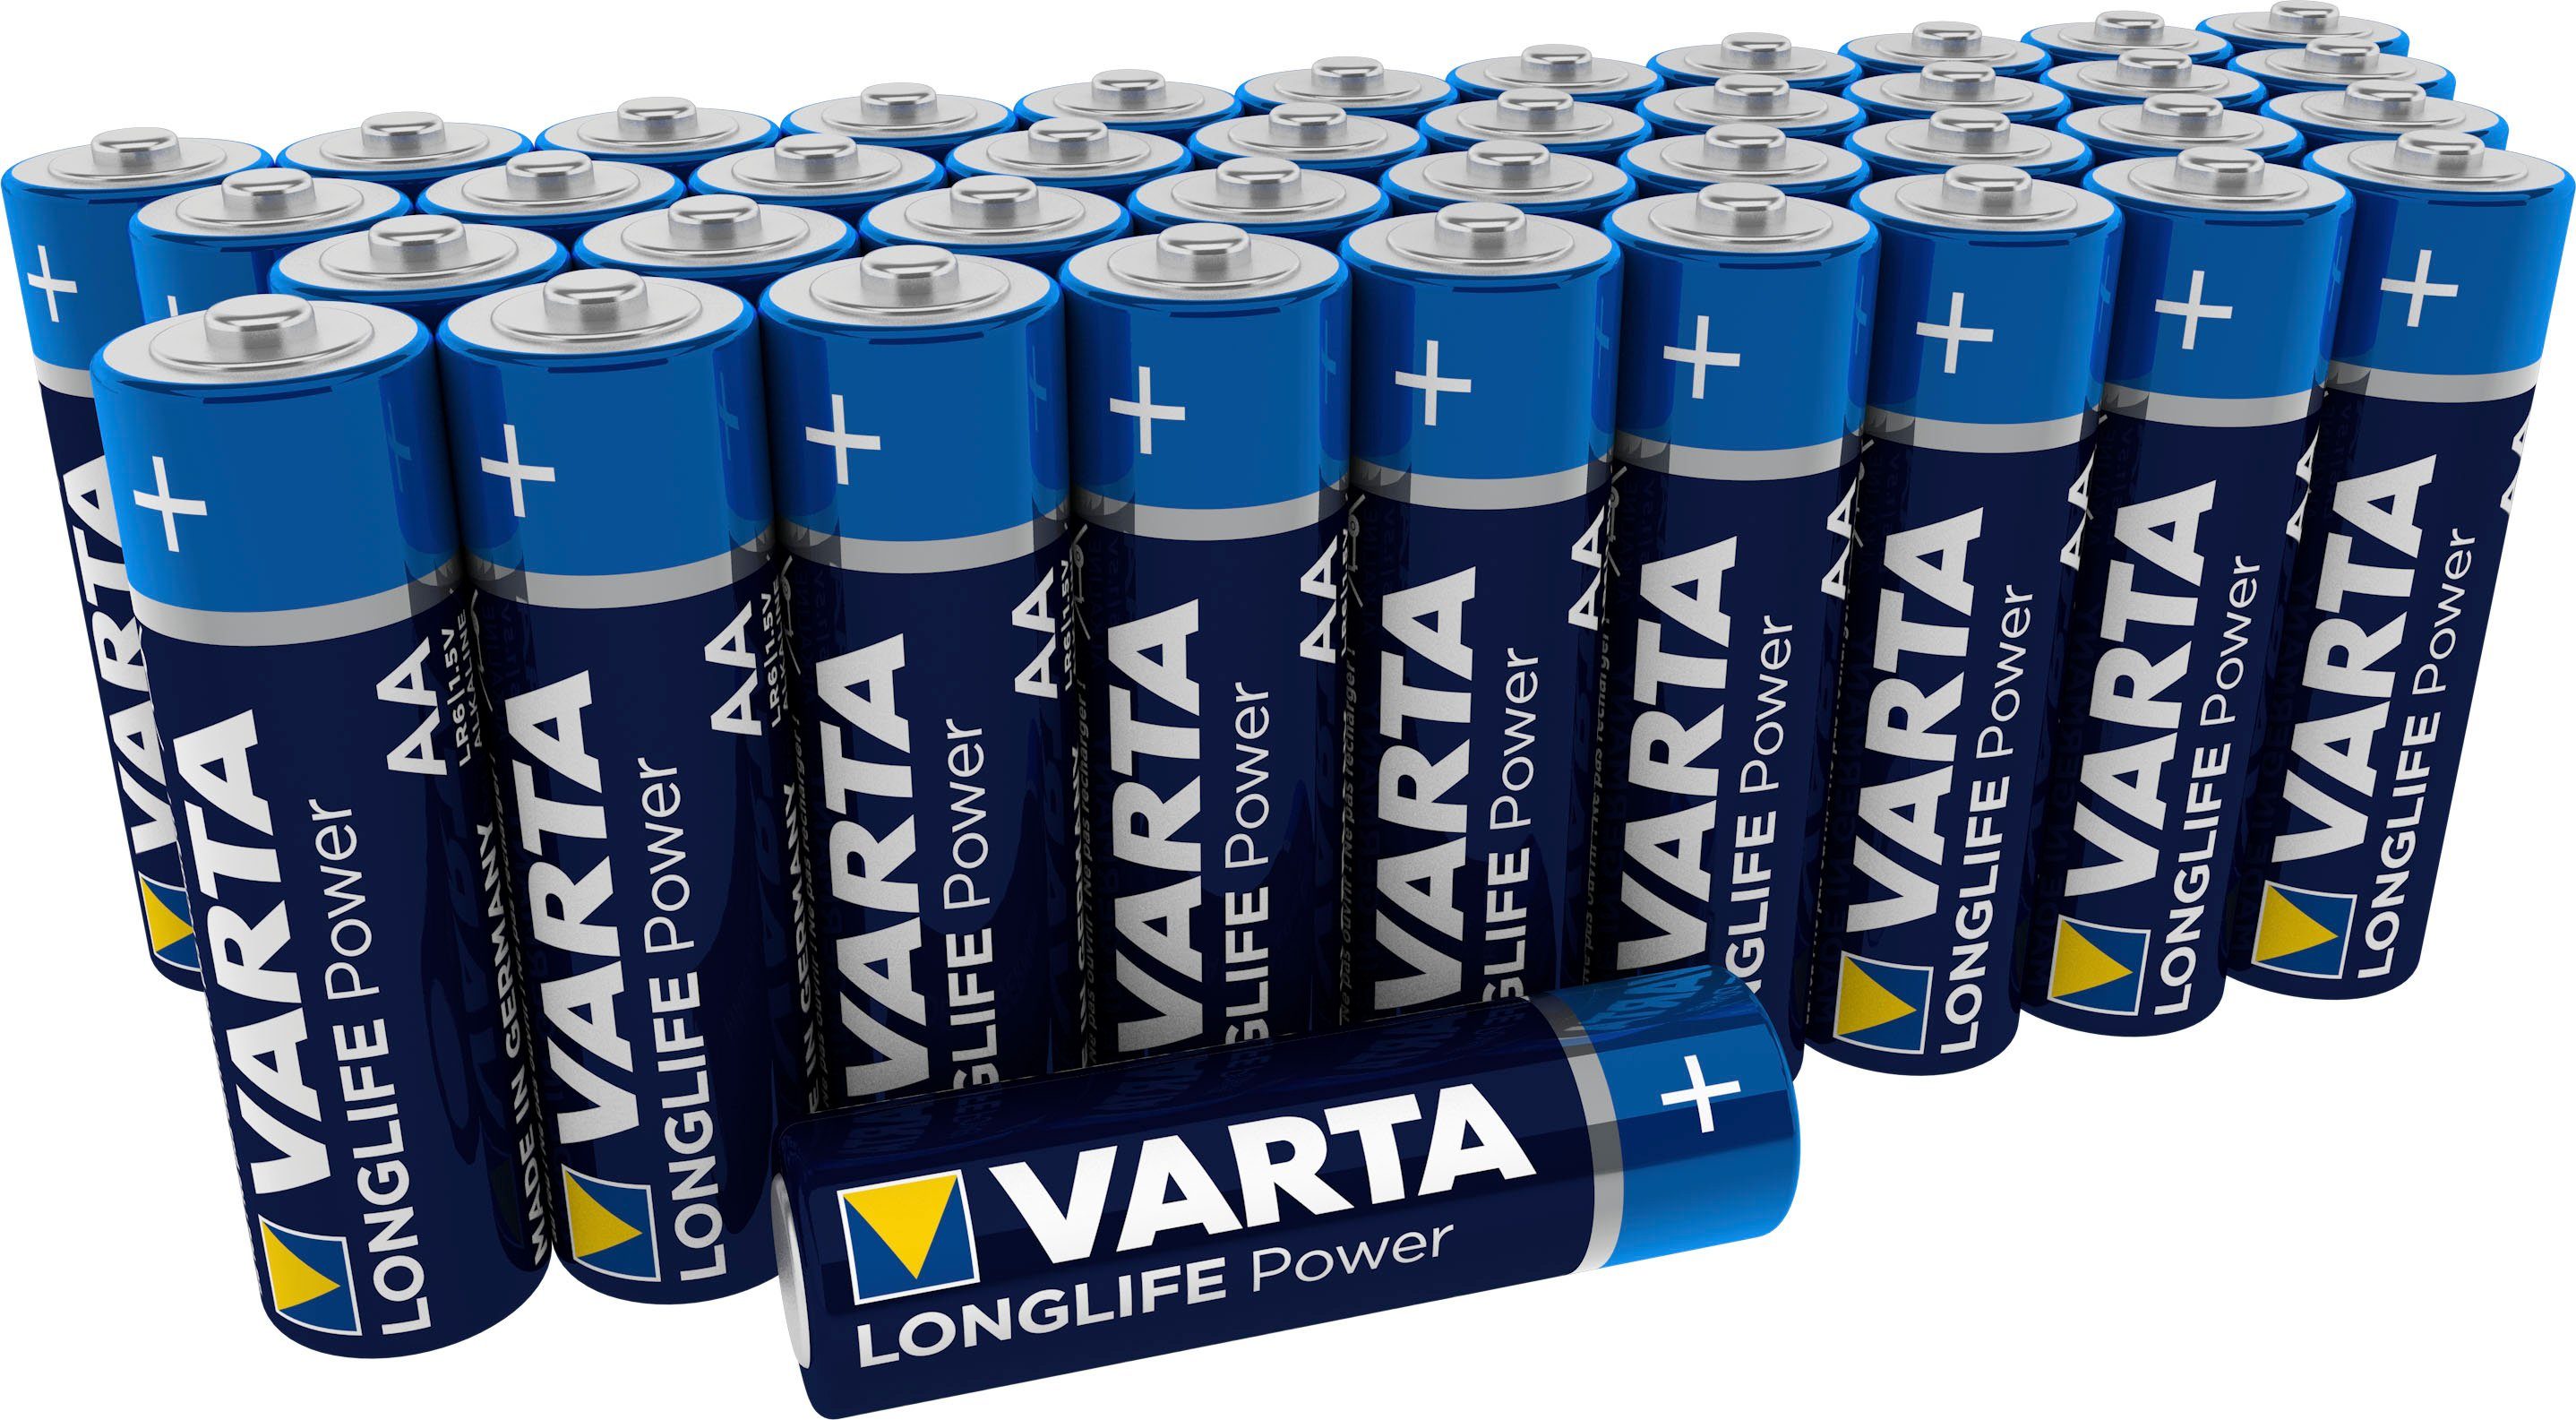 VARTA »VARTA LONGLIFE Power Storagebox Alkaline Batterie Vorratspack AA  Mignon LR6 40er Batterien Pack Made in Germany« Batterie, (1,5 V) online  kaufen | OTTO